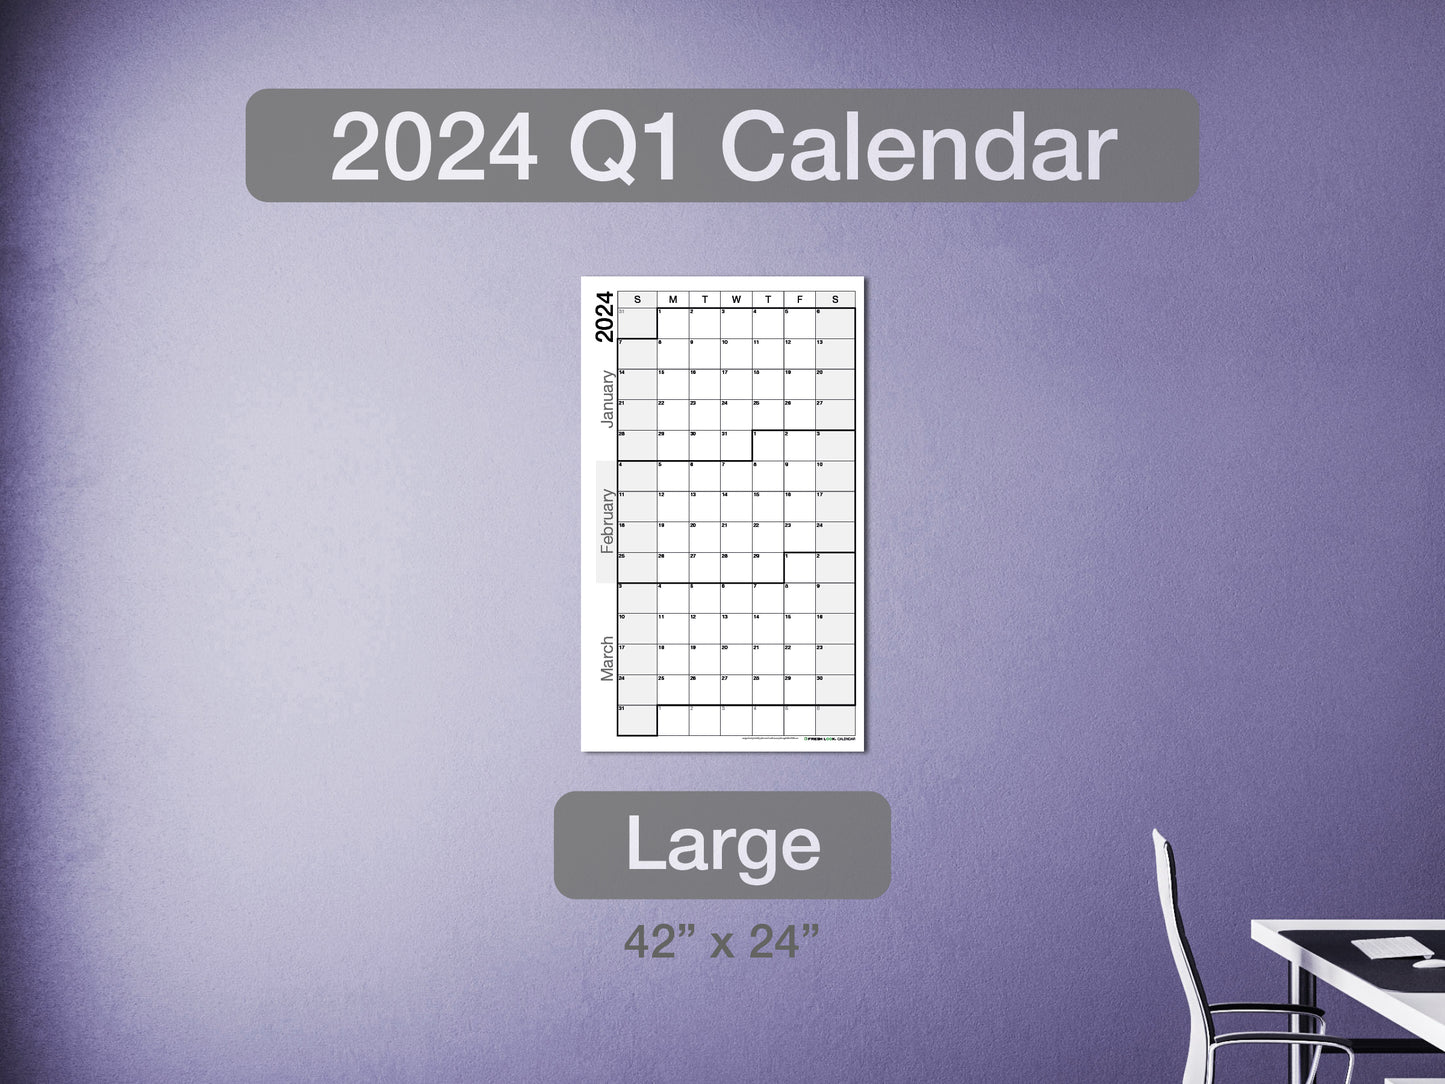 2024 Q1 Calendar Large